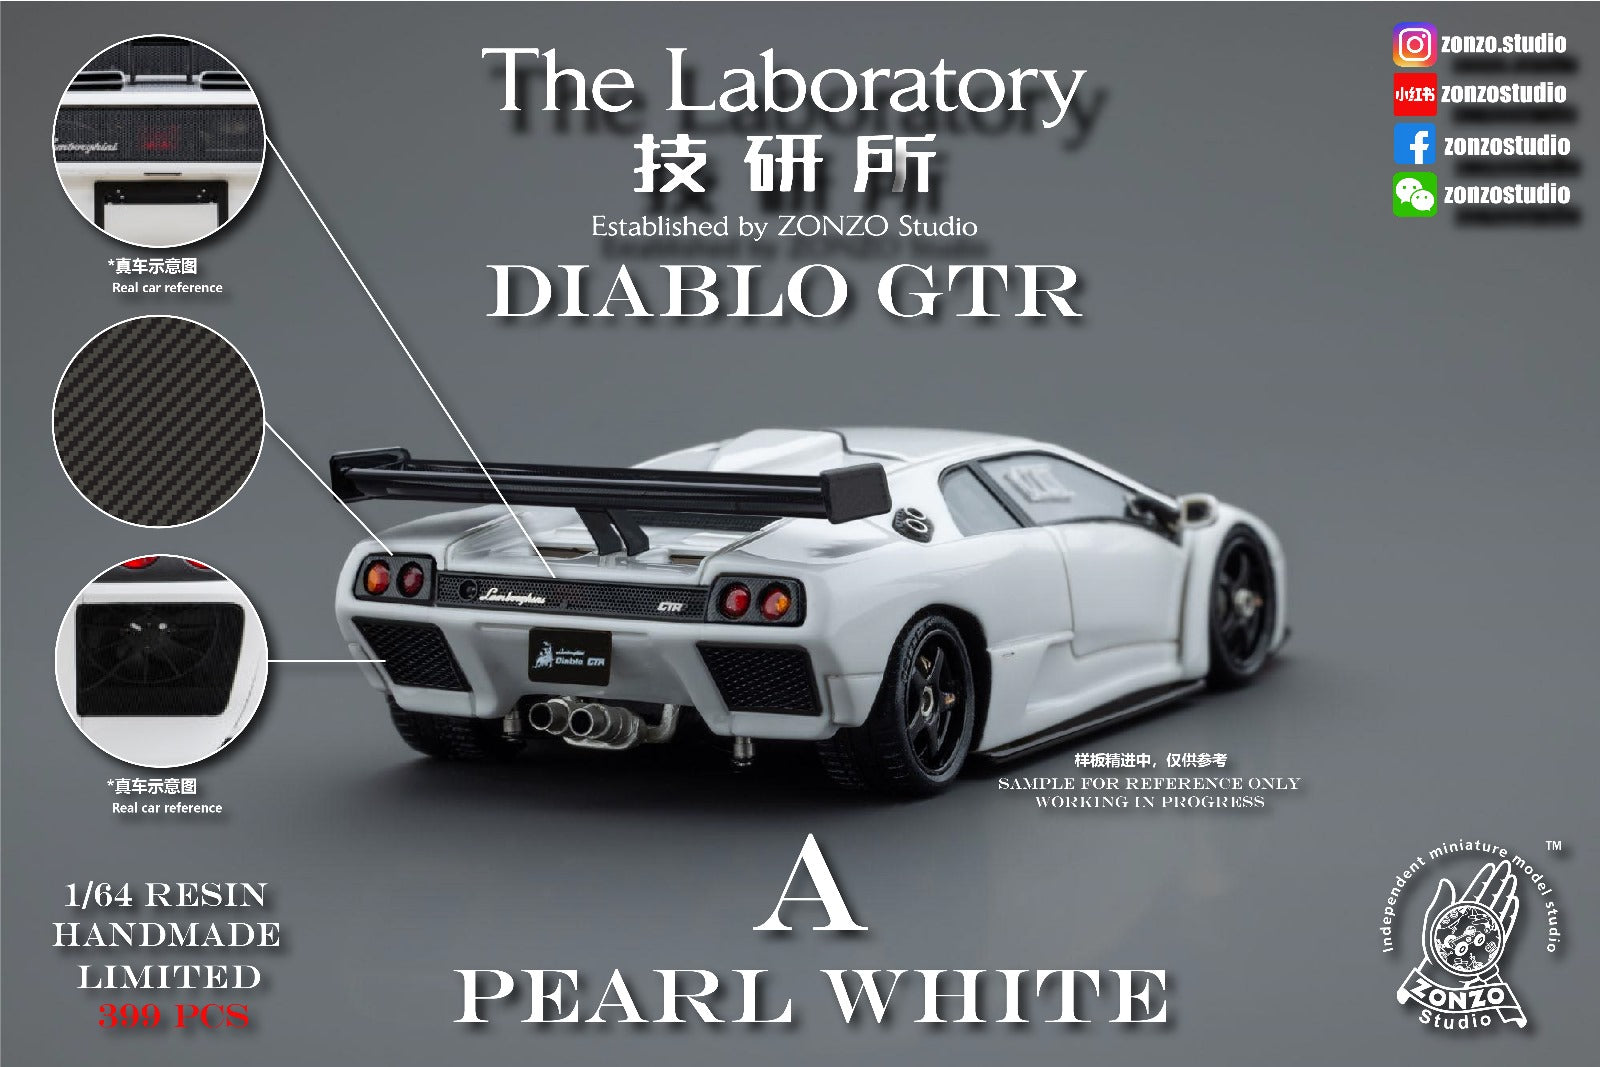 The Laboratory 1/64 Diablo GTR